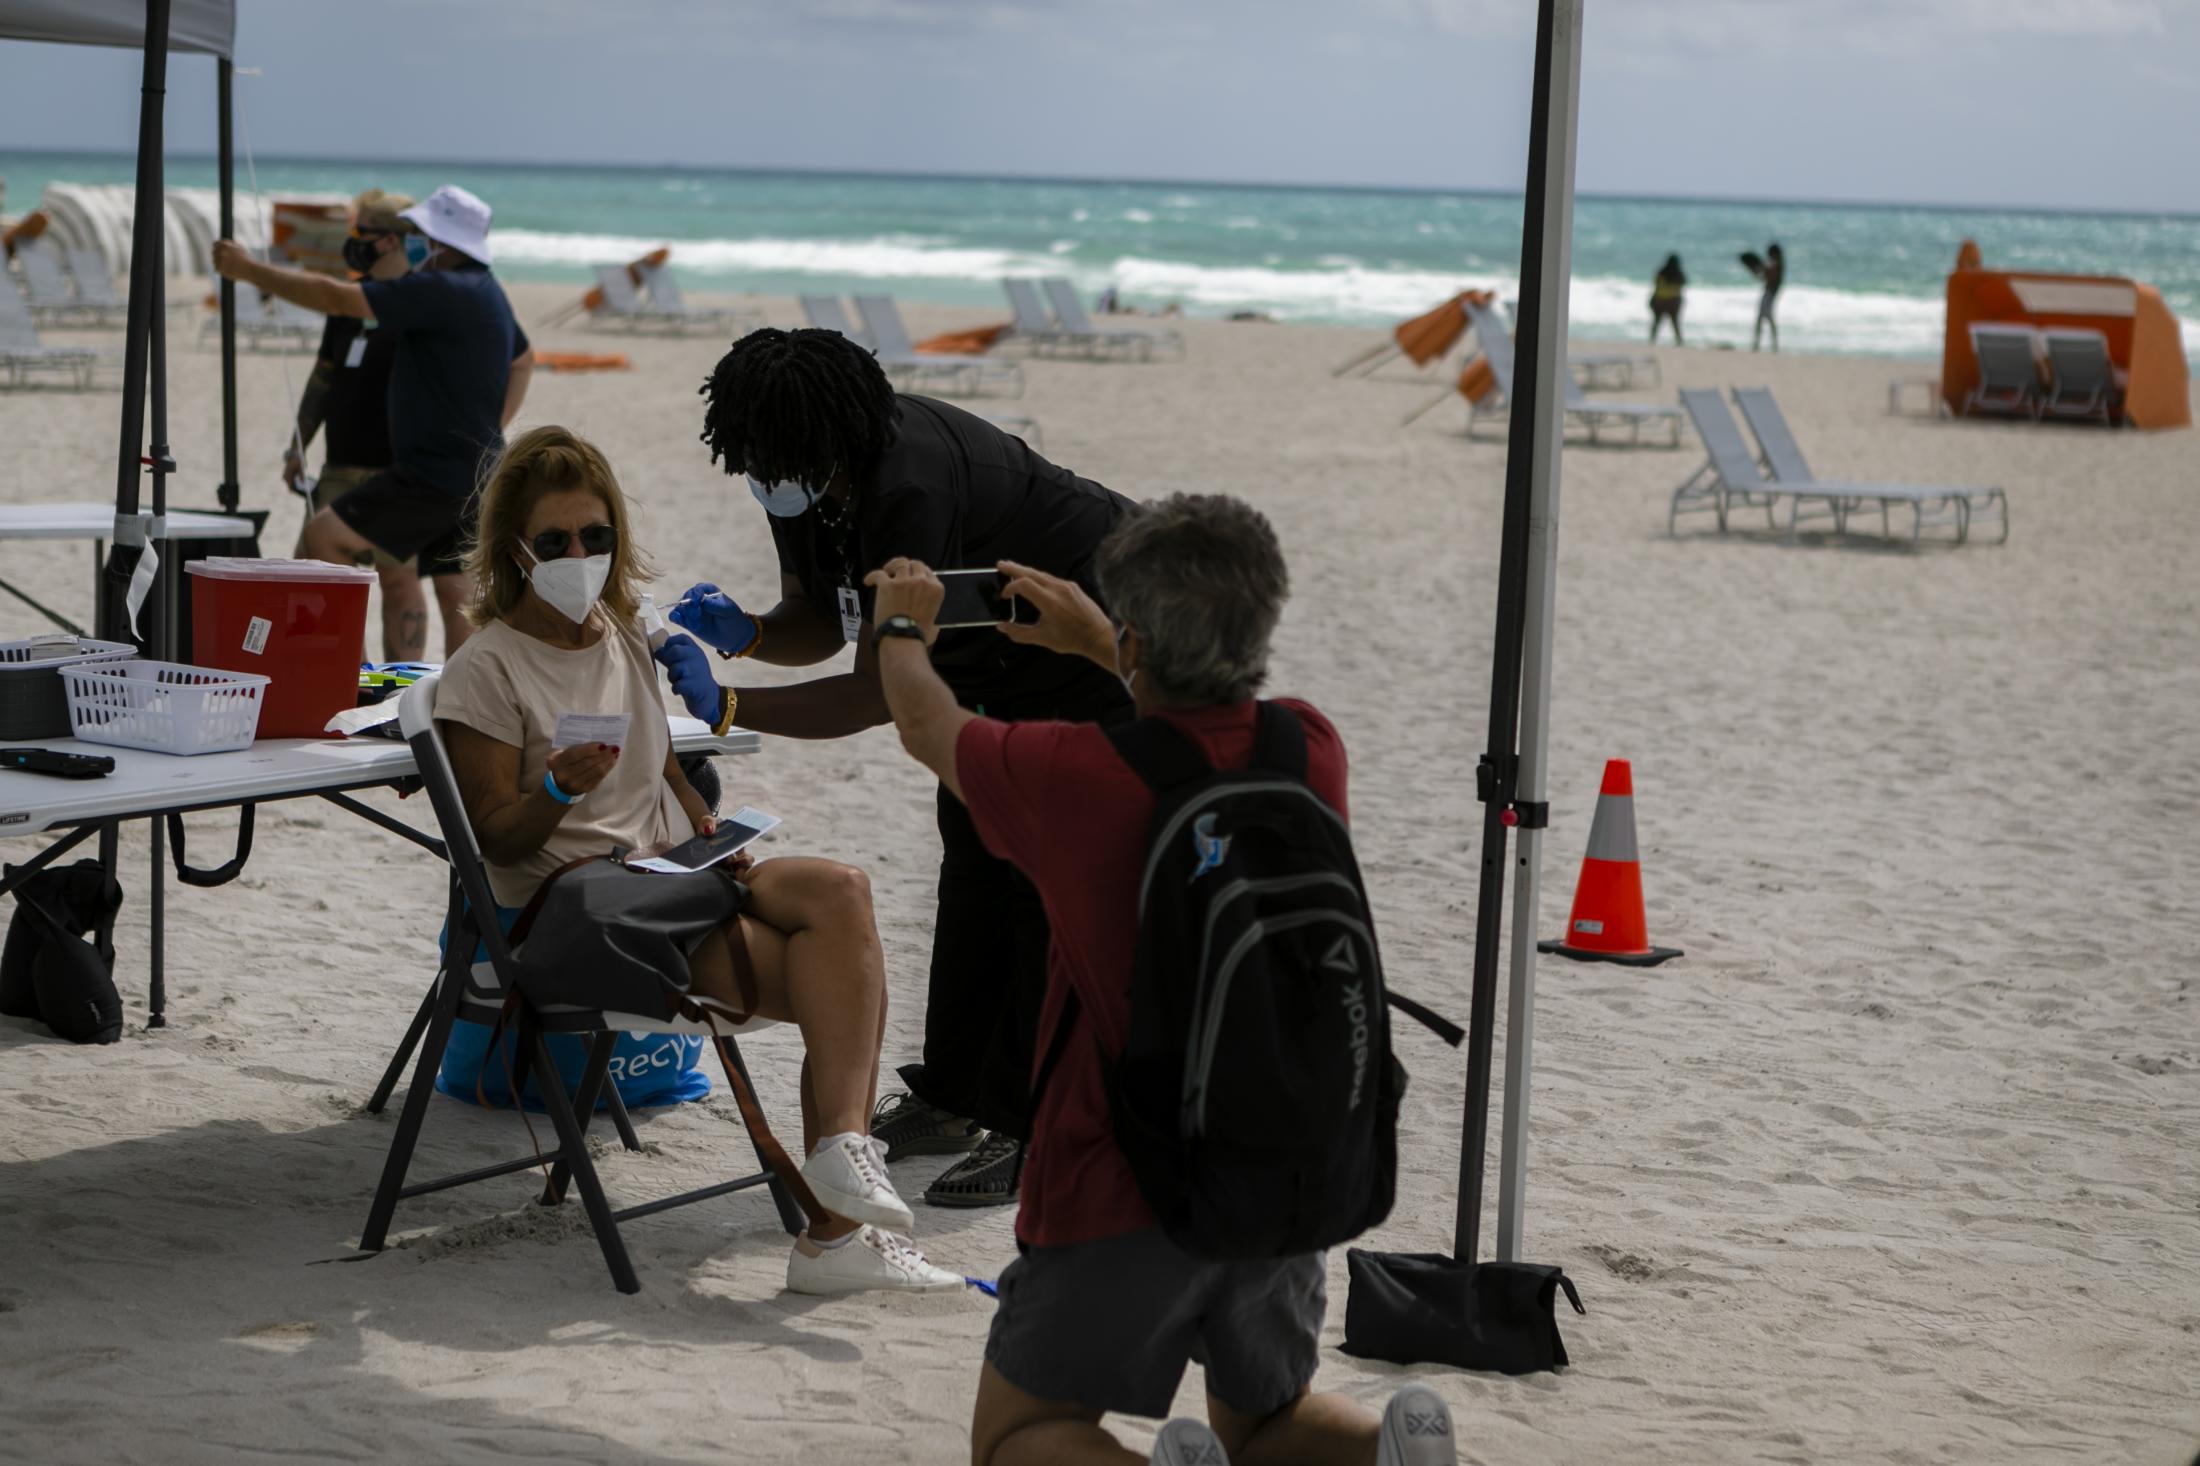 2021 - Tourists get Johnson & Johnson COVID-19 vaccine at Miami Beach - A woman receives a shot of Johnson & Johnson COVID-19...